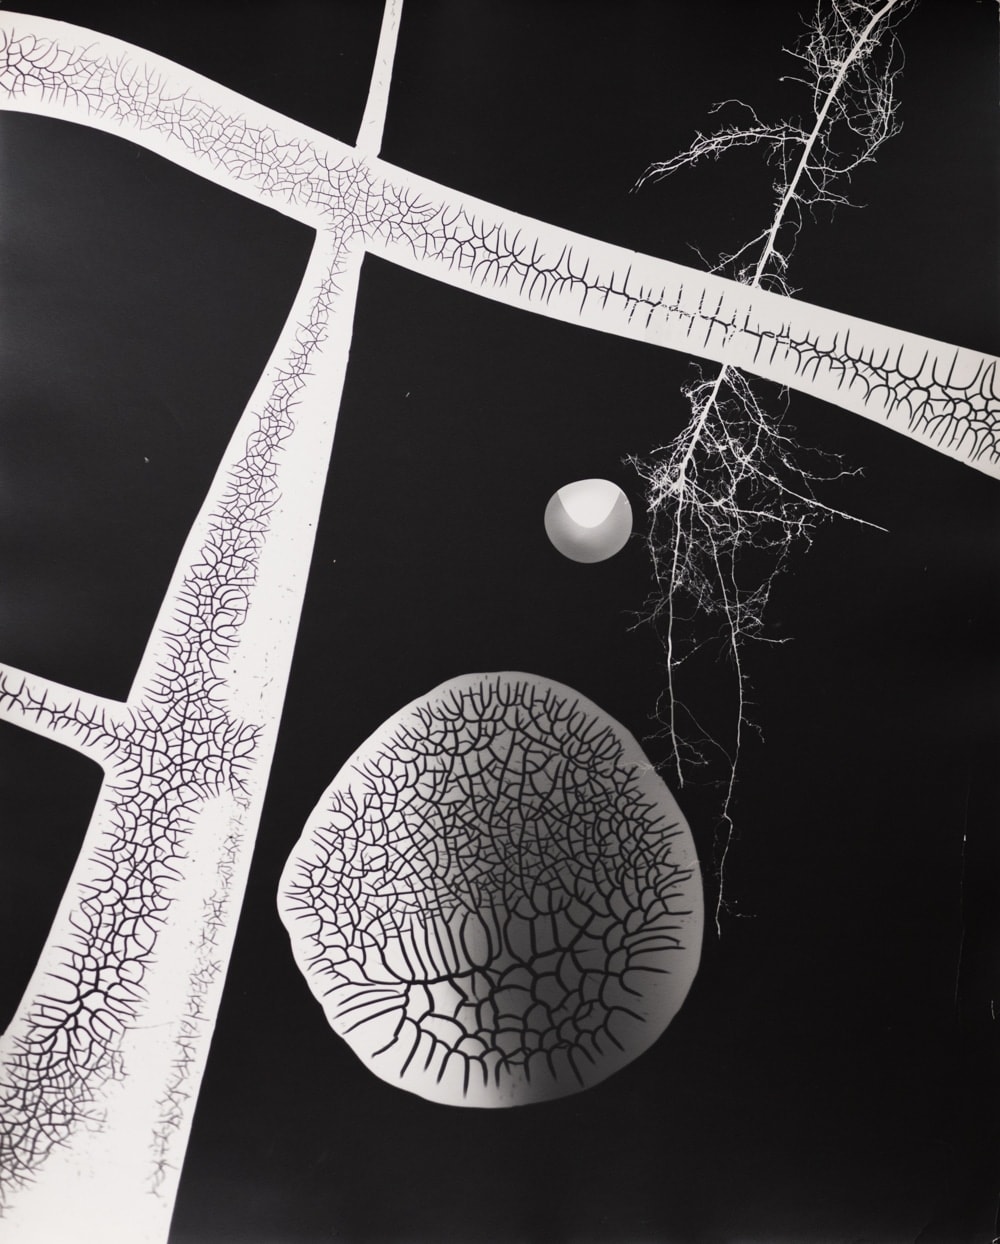 György Kepes, Photogram-reticulated abstraction, 1979